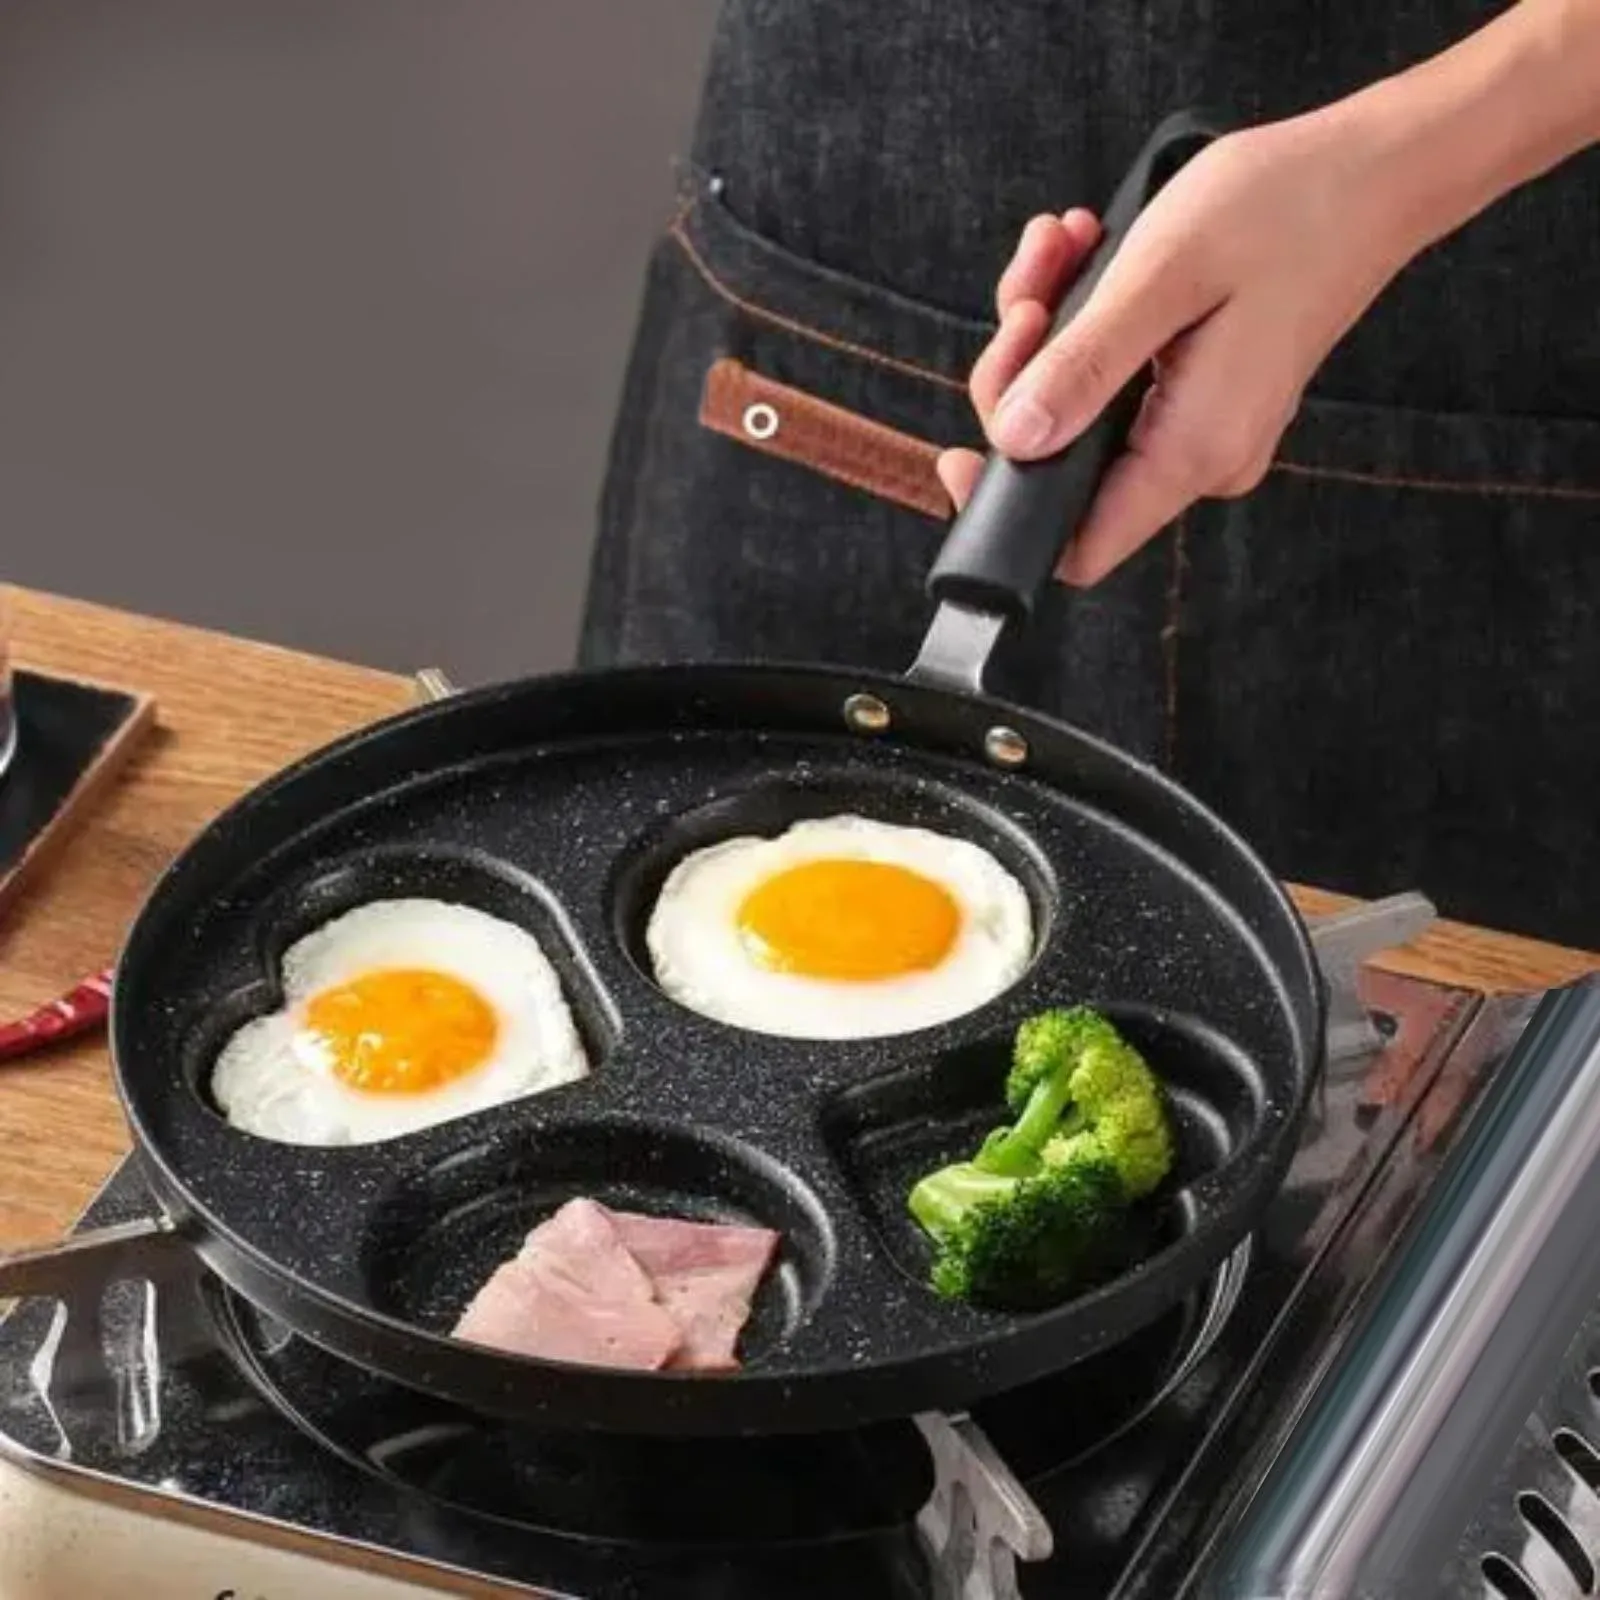 https://ae01.alicdn.com/kf/S5d8aae3e432944bc8dcd5b8114fb2231R/Large-Pan-with-Tortilla-Pan-No-Handle-Breakfast-Frying-For-Eggs-Cooking-Pancake-Pan-Deep-Nonstick.jpg